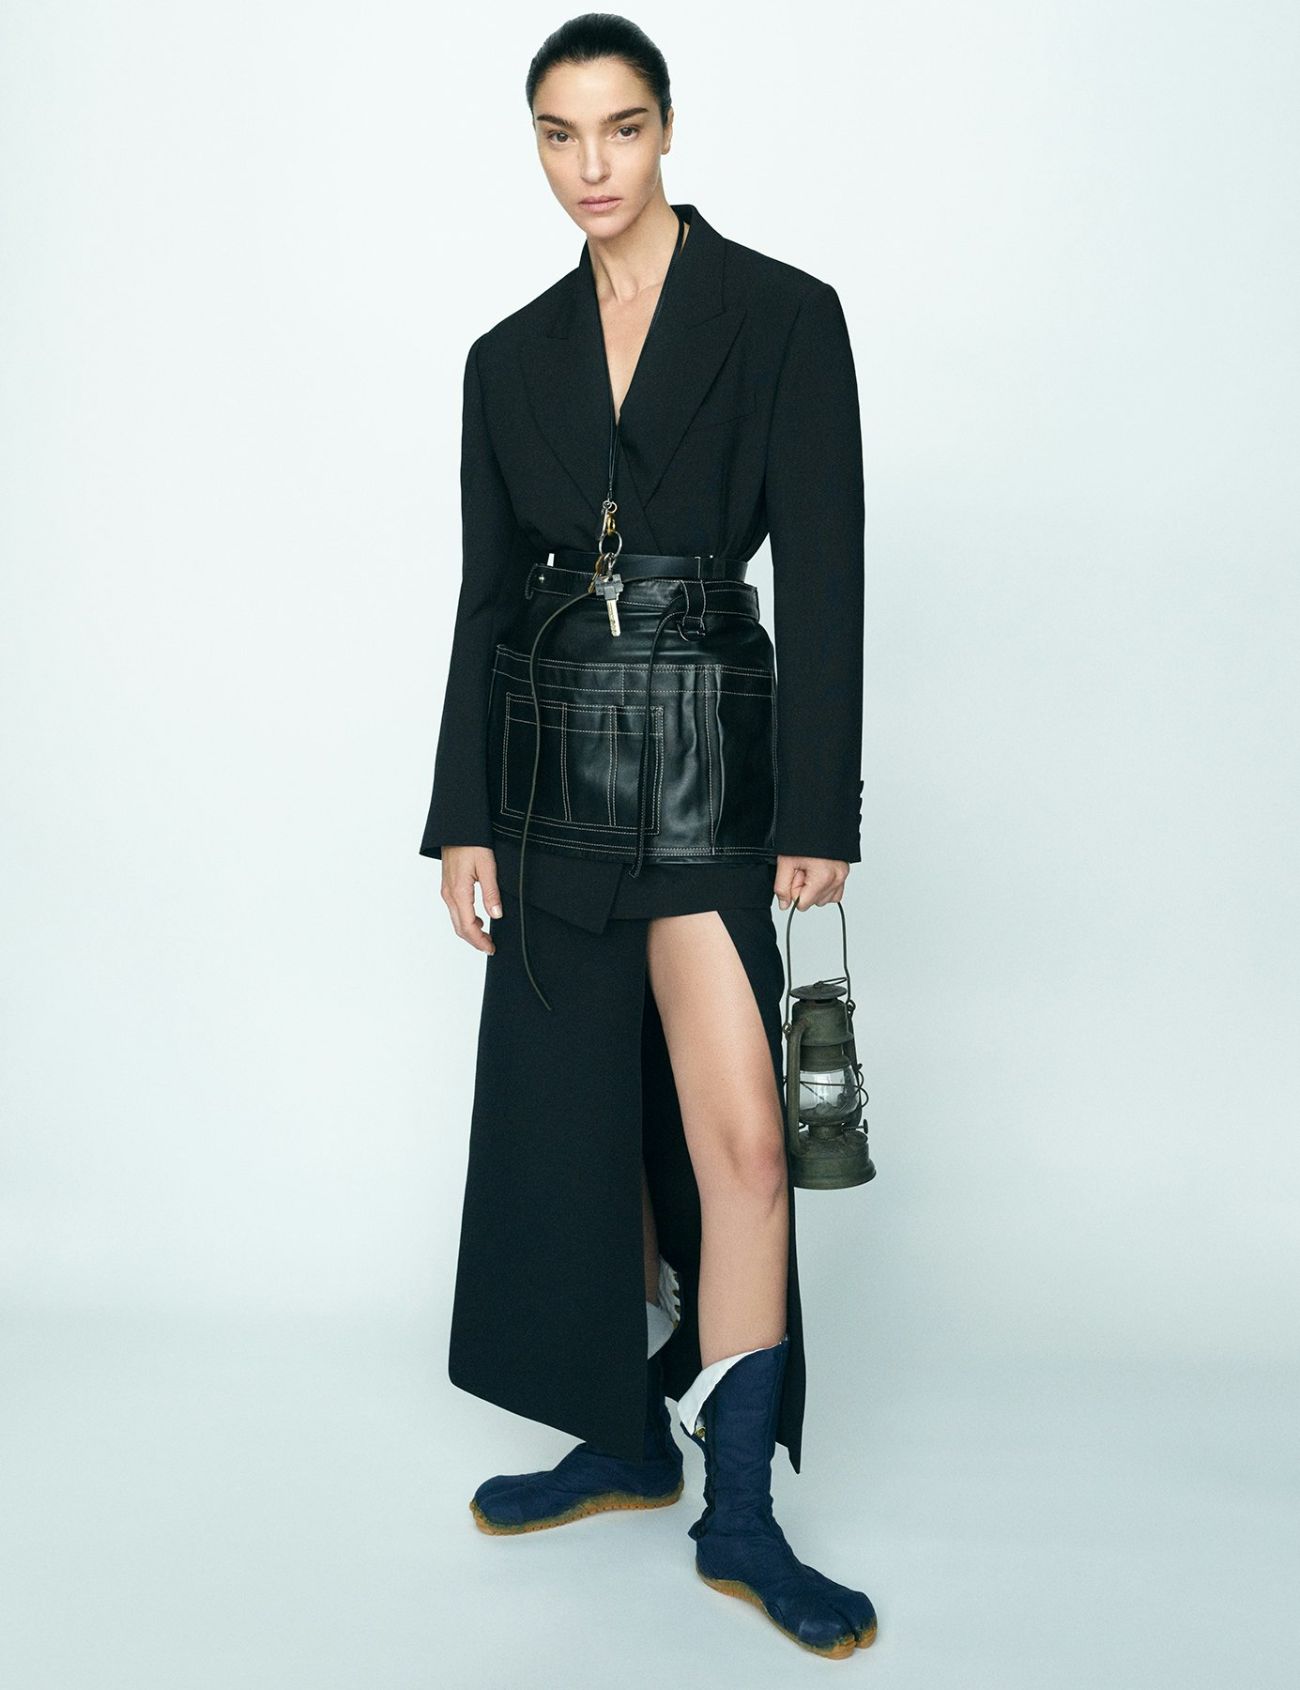 Valentino jacket and skirt Fashion Editorials